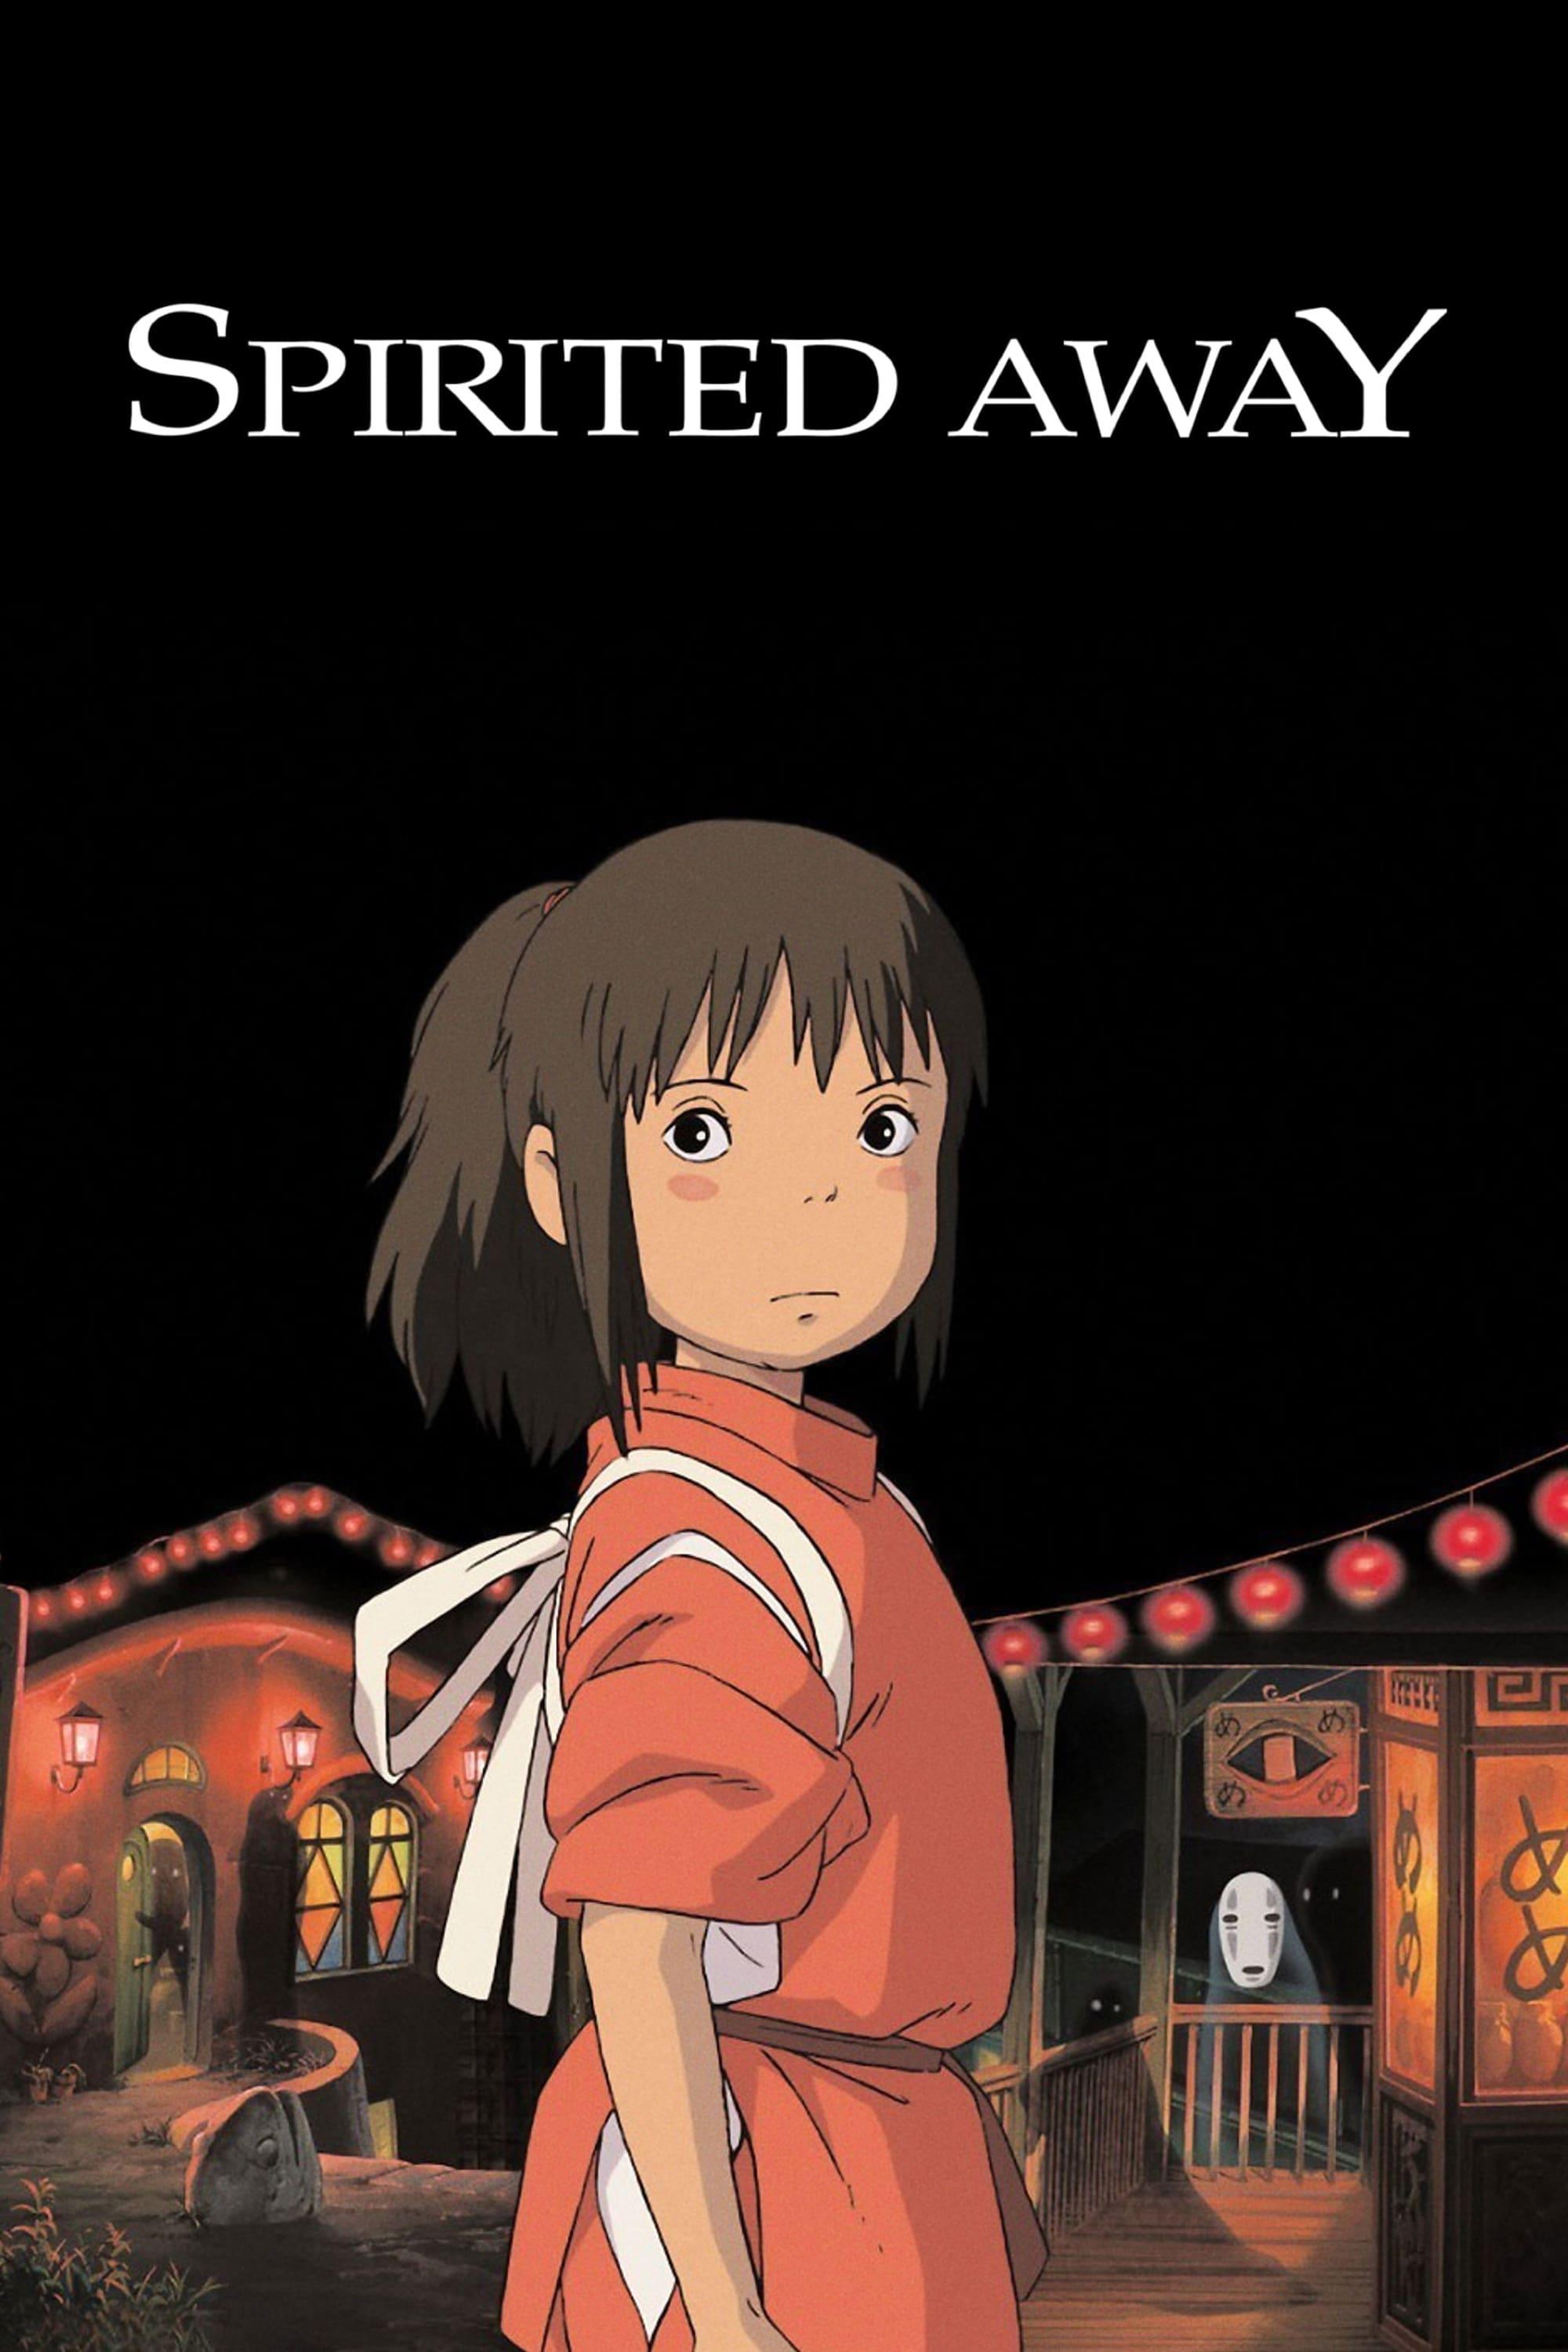 Movie poster of "Spirited Away"